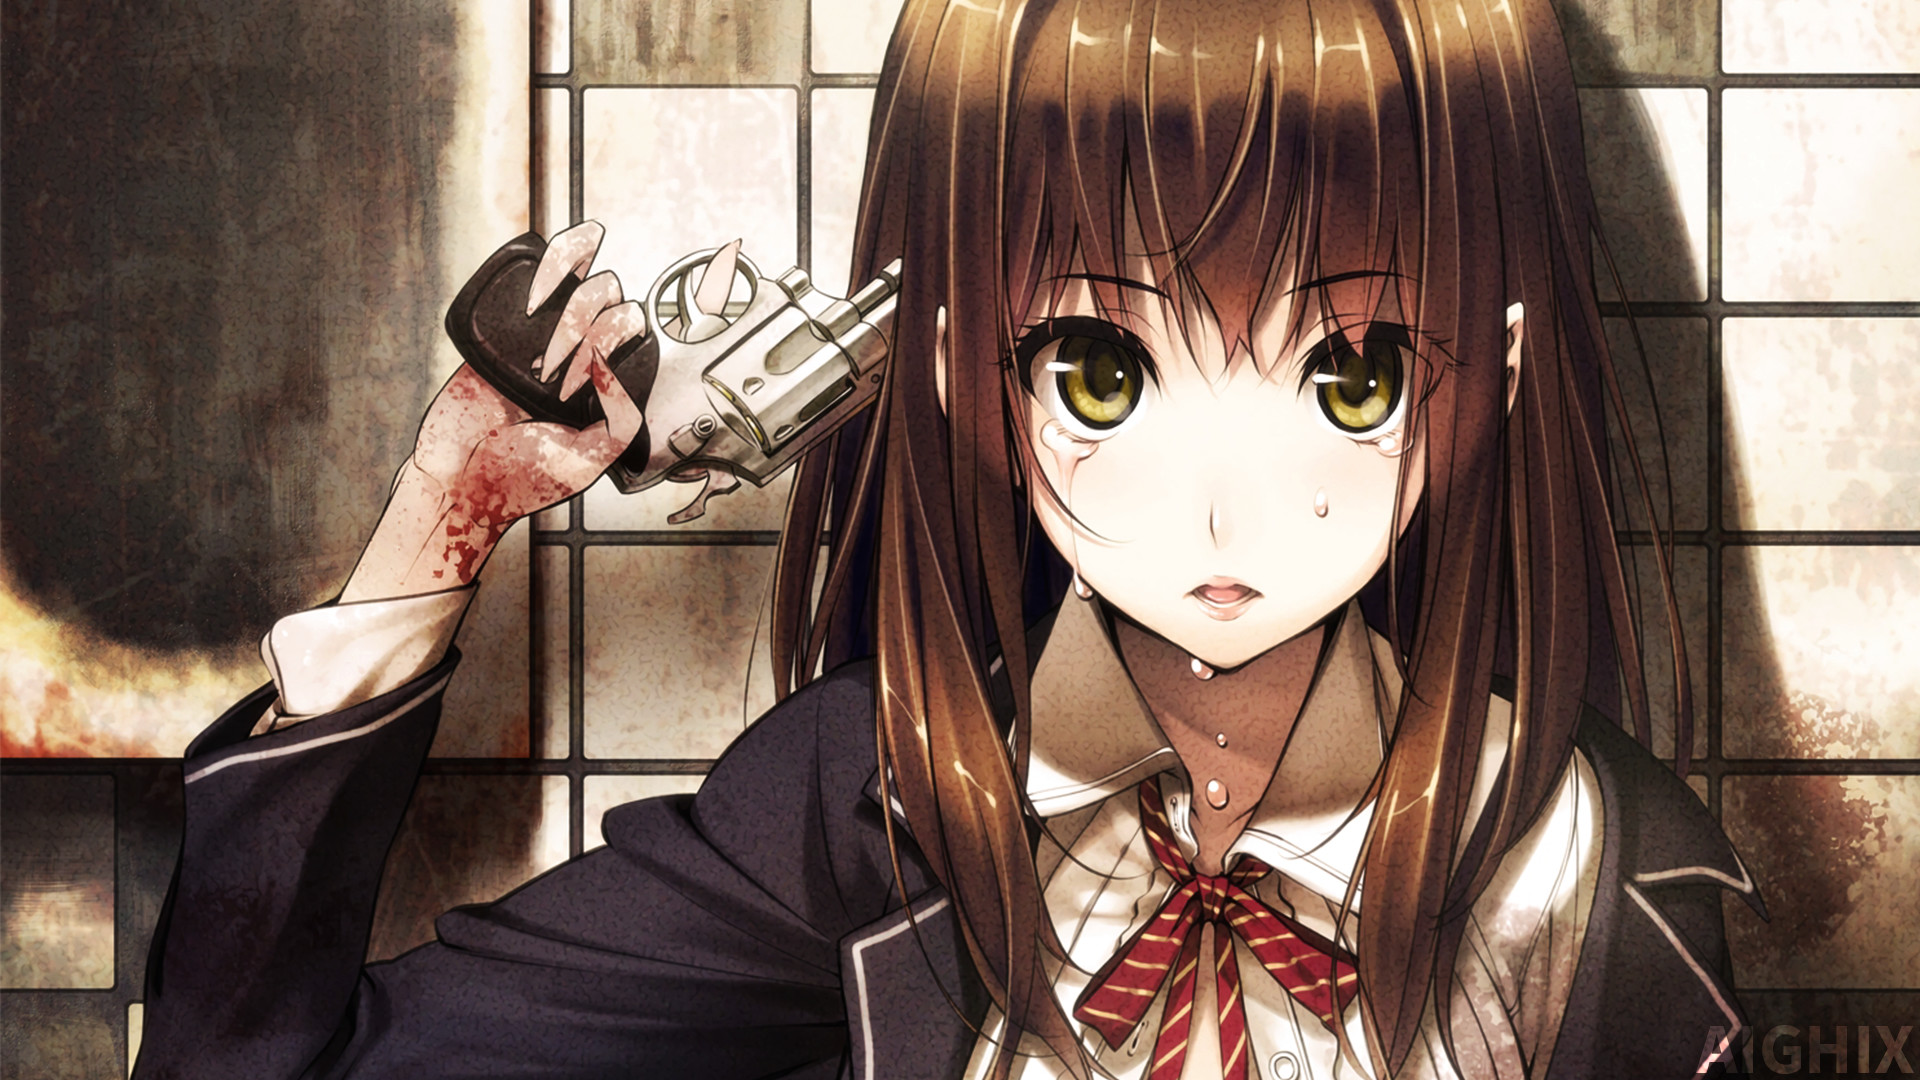 1920x1080 ... Sad Anime Girl With Gun Wallpaper by AIGHIX